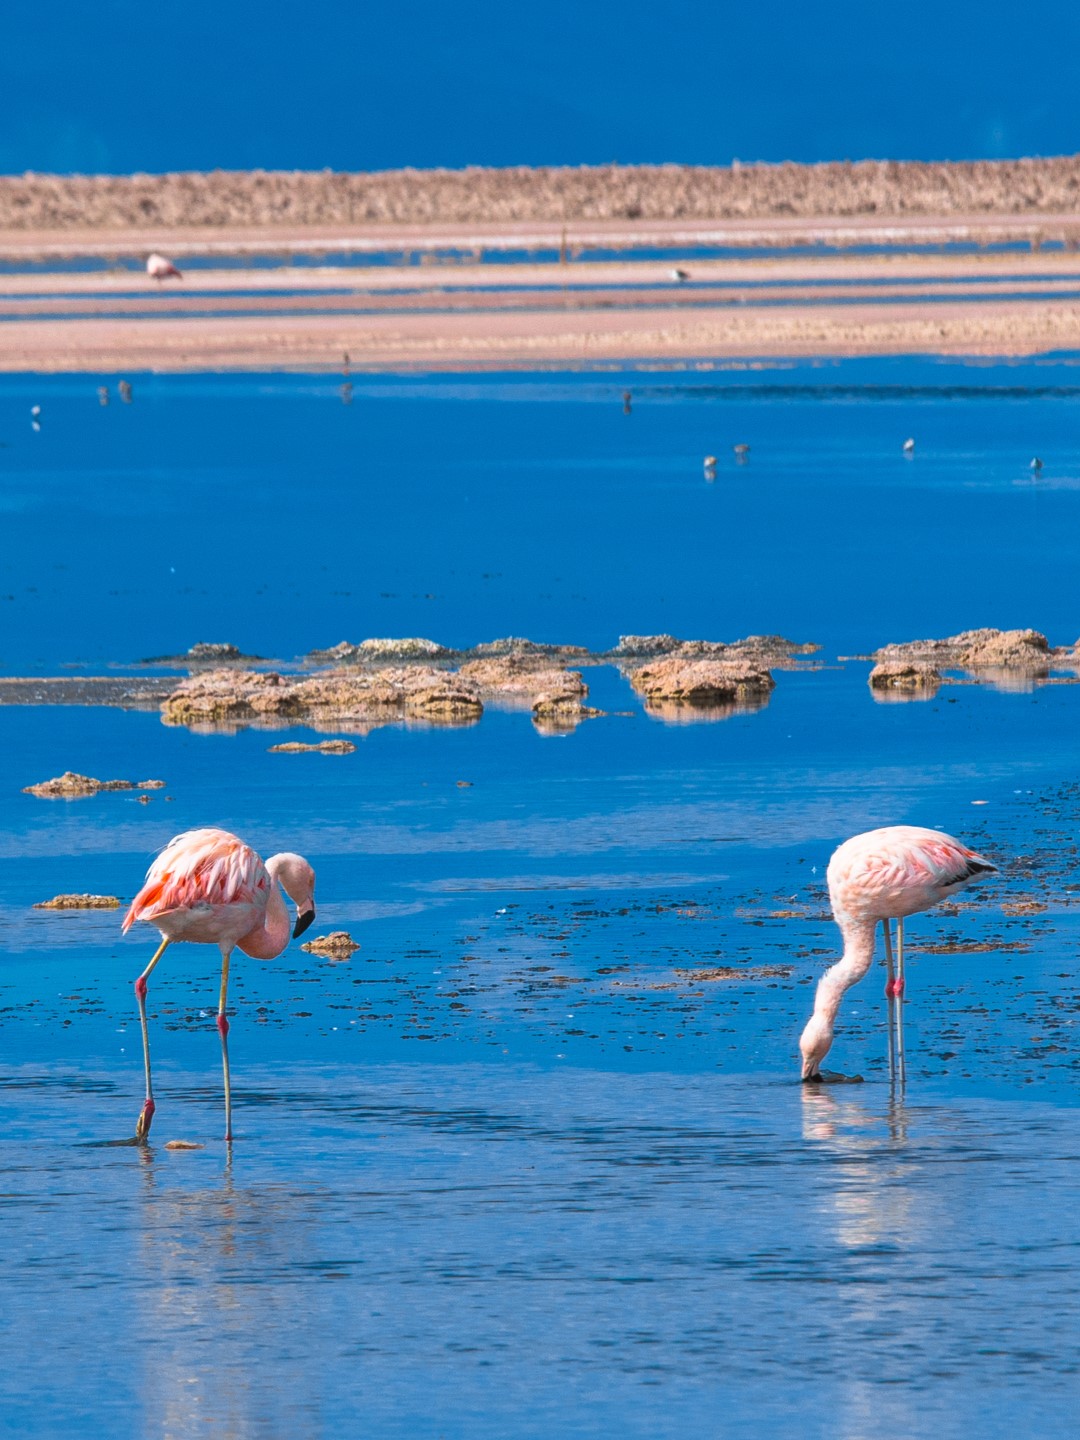 Flamingos in the Atacama Desert